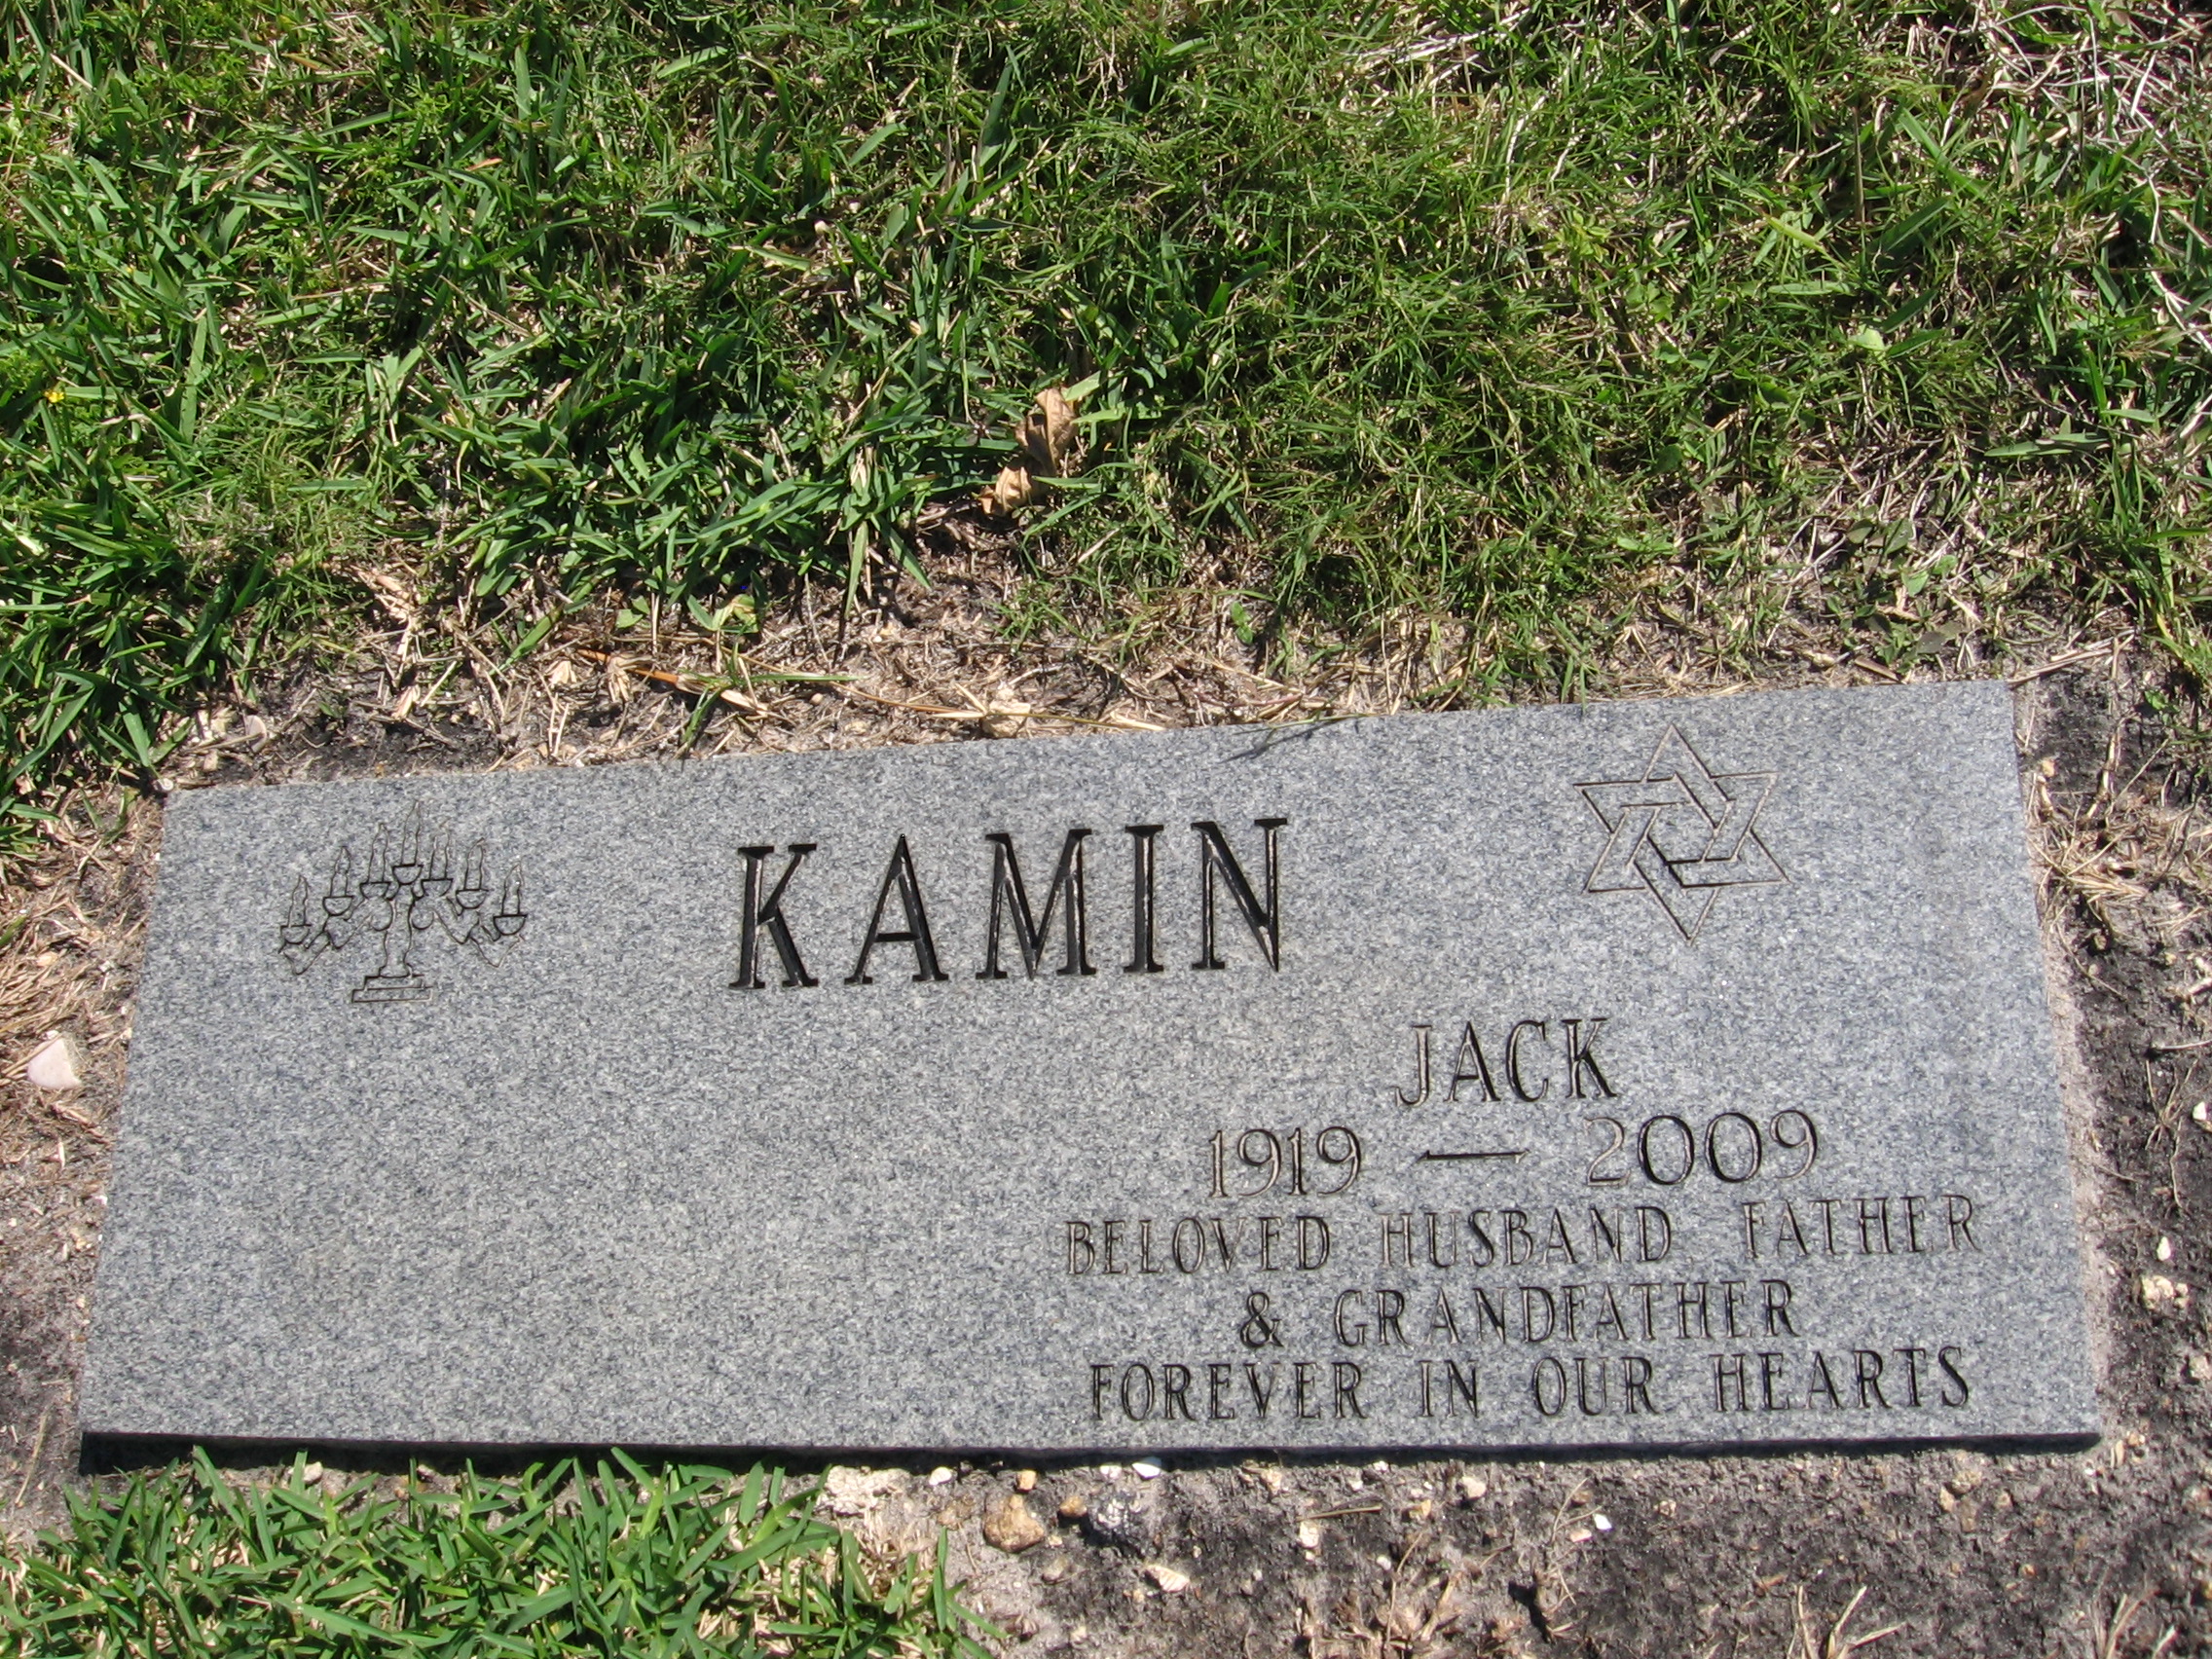 Jack Kamin